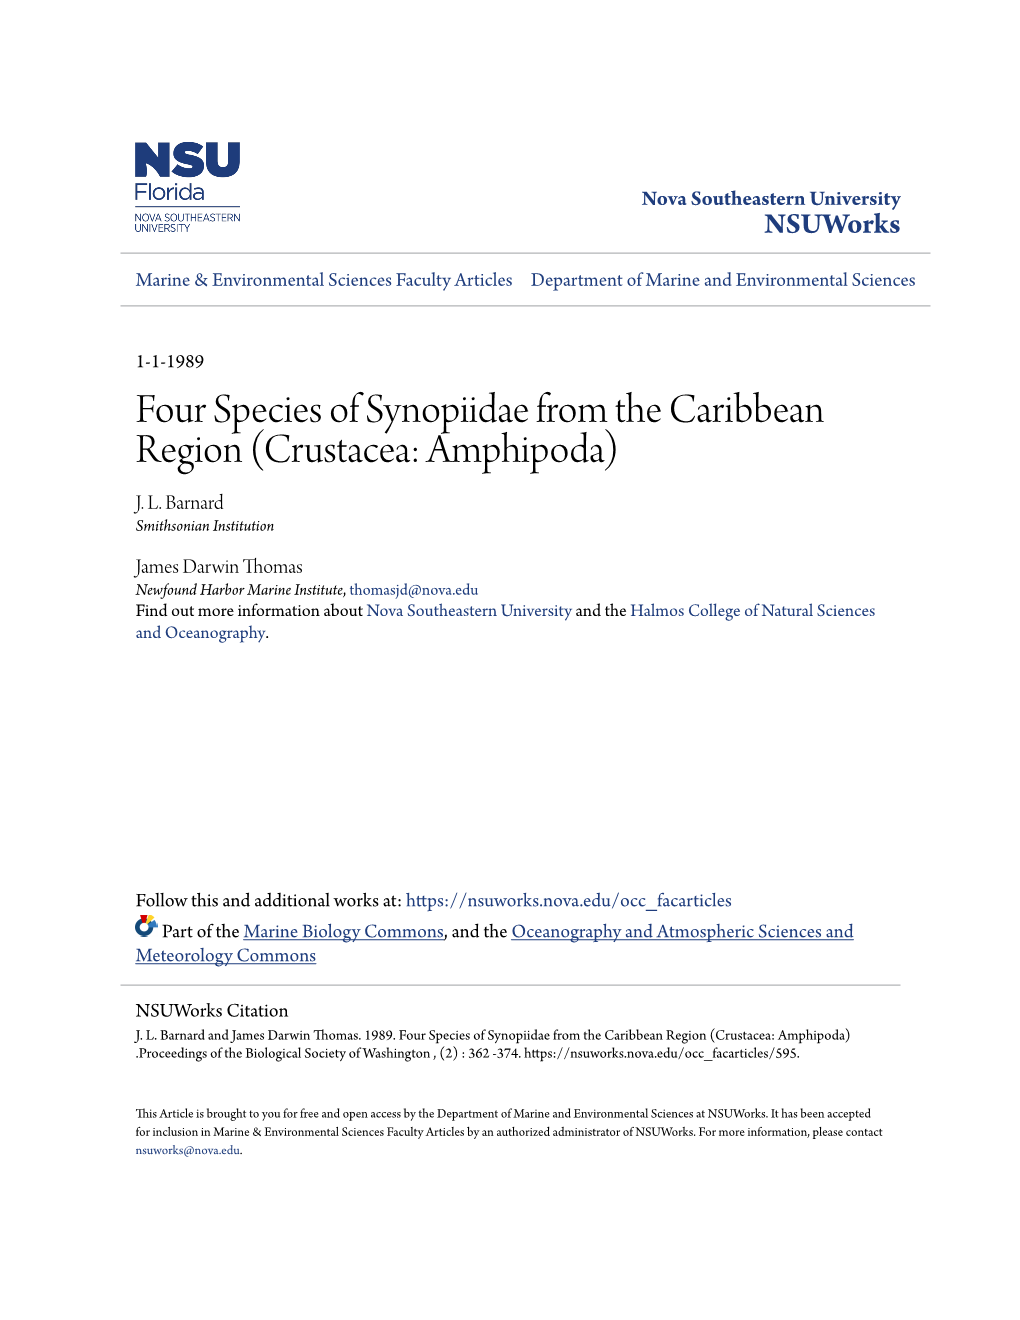 Four Species of Synopiidae from the Caribbean Region (Crustacea: Amphipoda) J